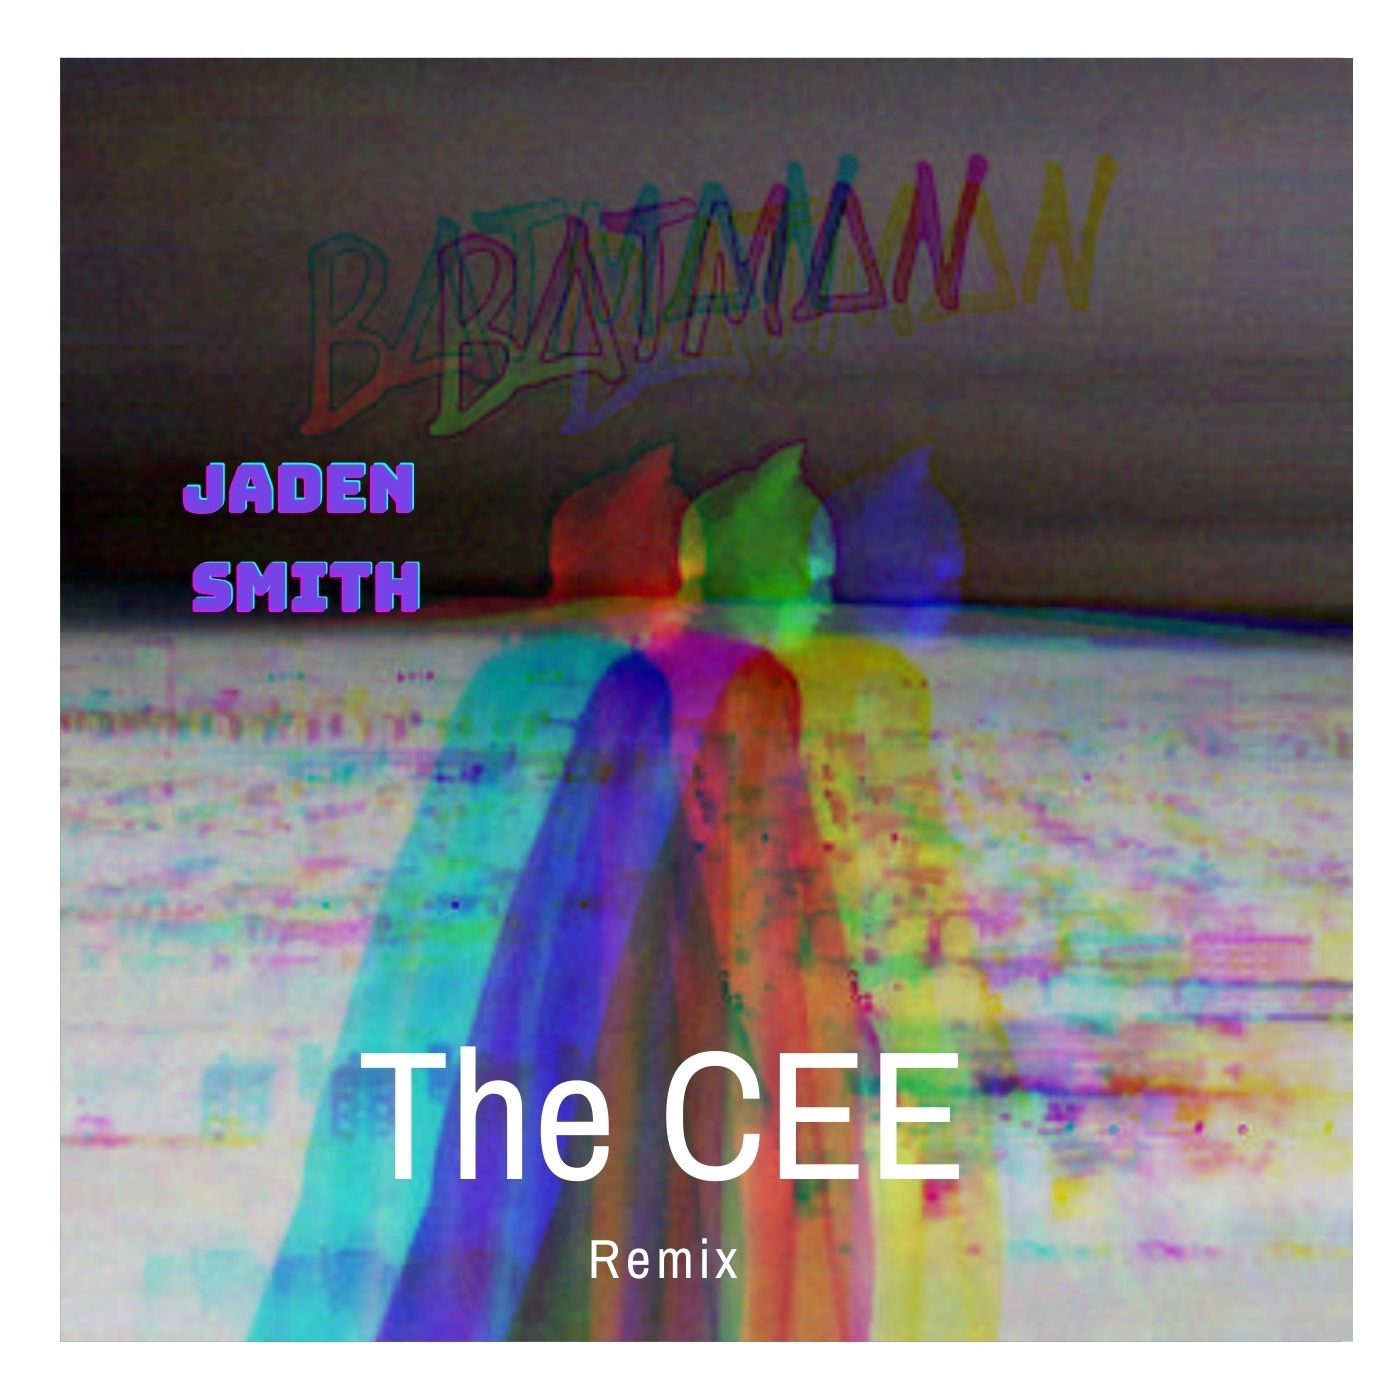 Batman (The CEE Remix) (Drum & Bass Remix) (Hybrid Trap Remix) by The CEE -  MP3 Download, Audio Download 